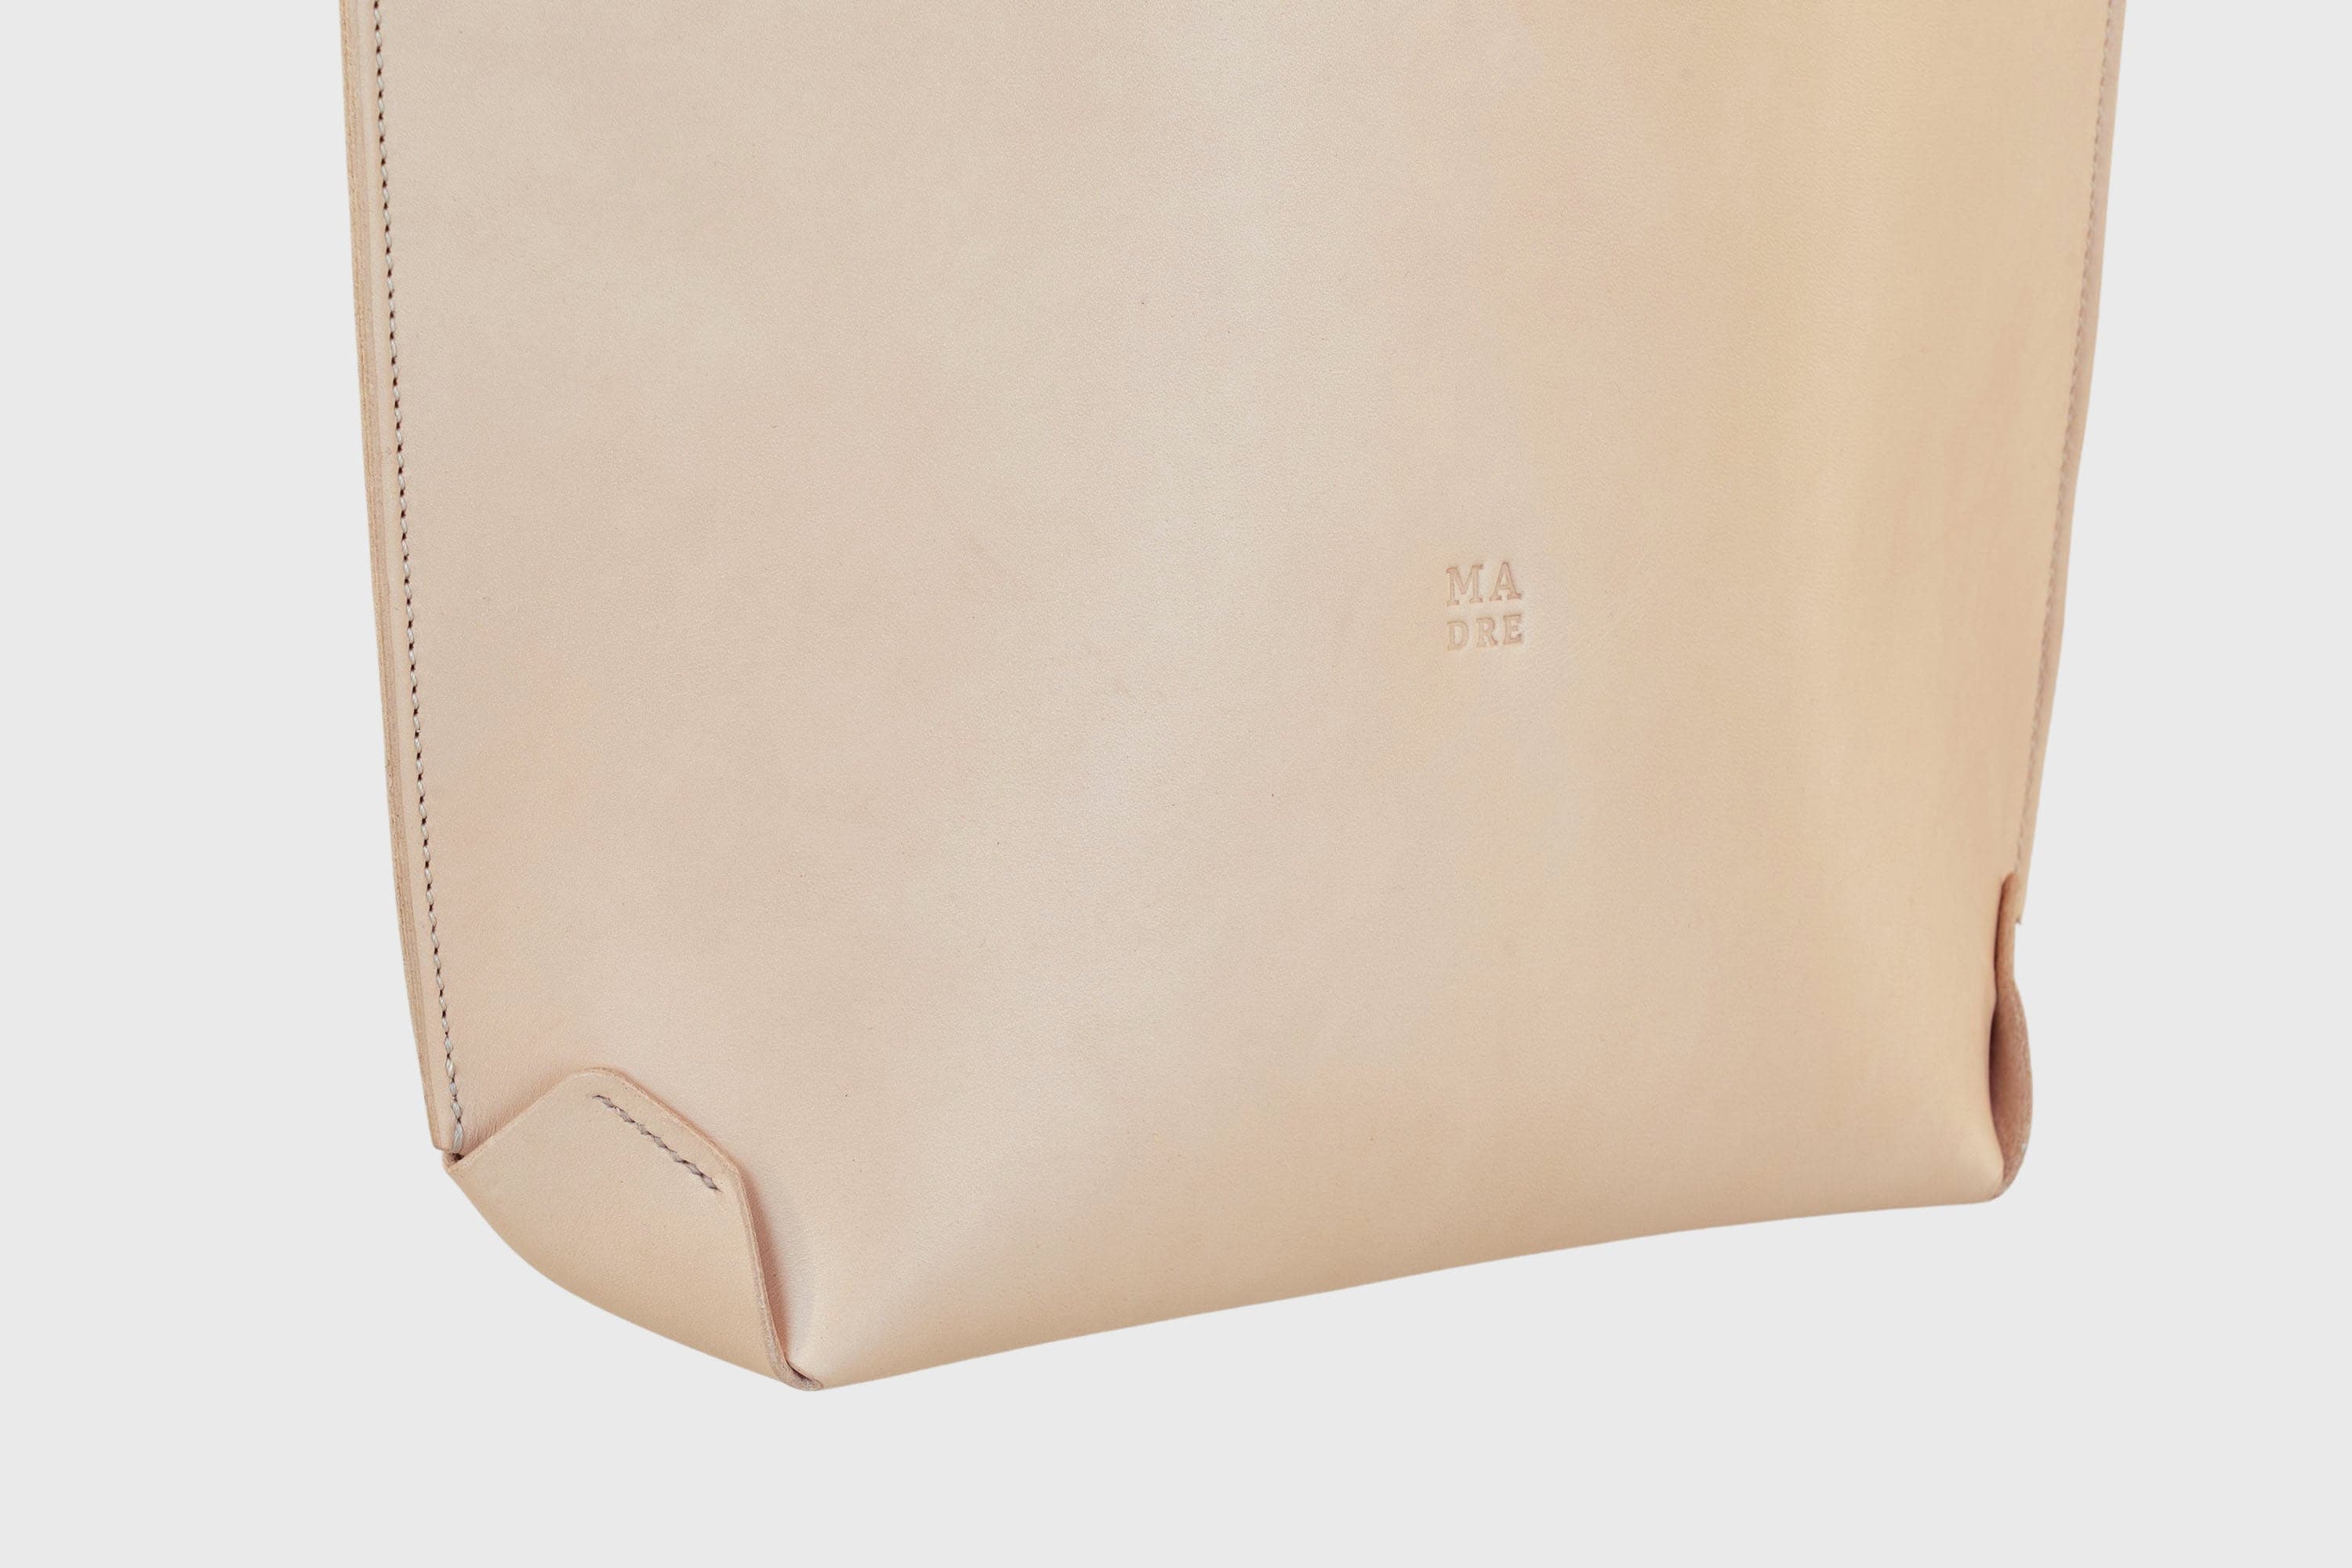 Tall Tote Bag Natural Vachetta Color Handstitched Leather Beige Minimalism Design By Manuel Dreesmann Atelier Madre Barcelona Spain